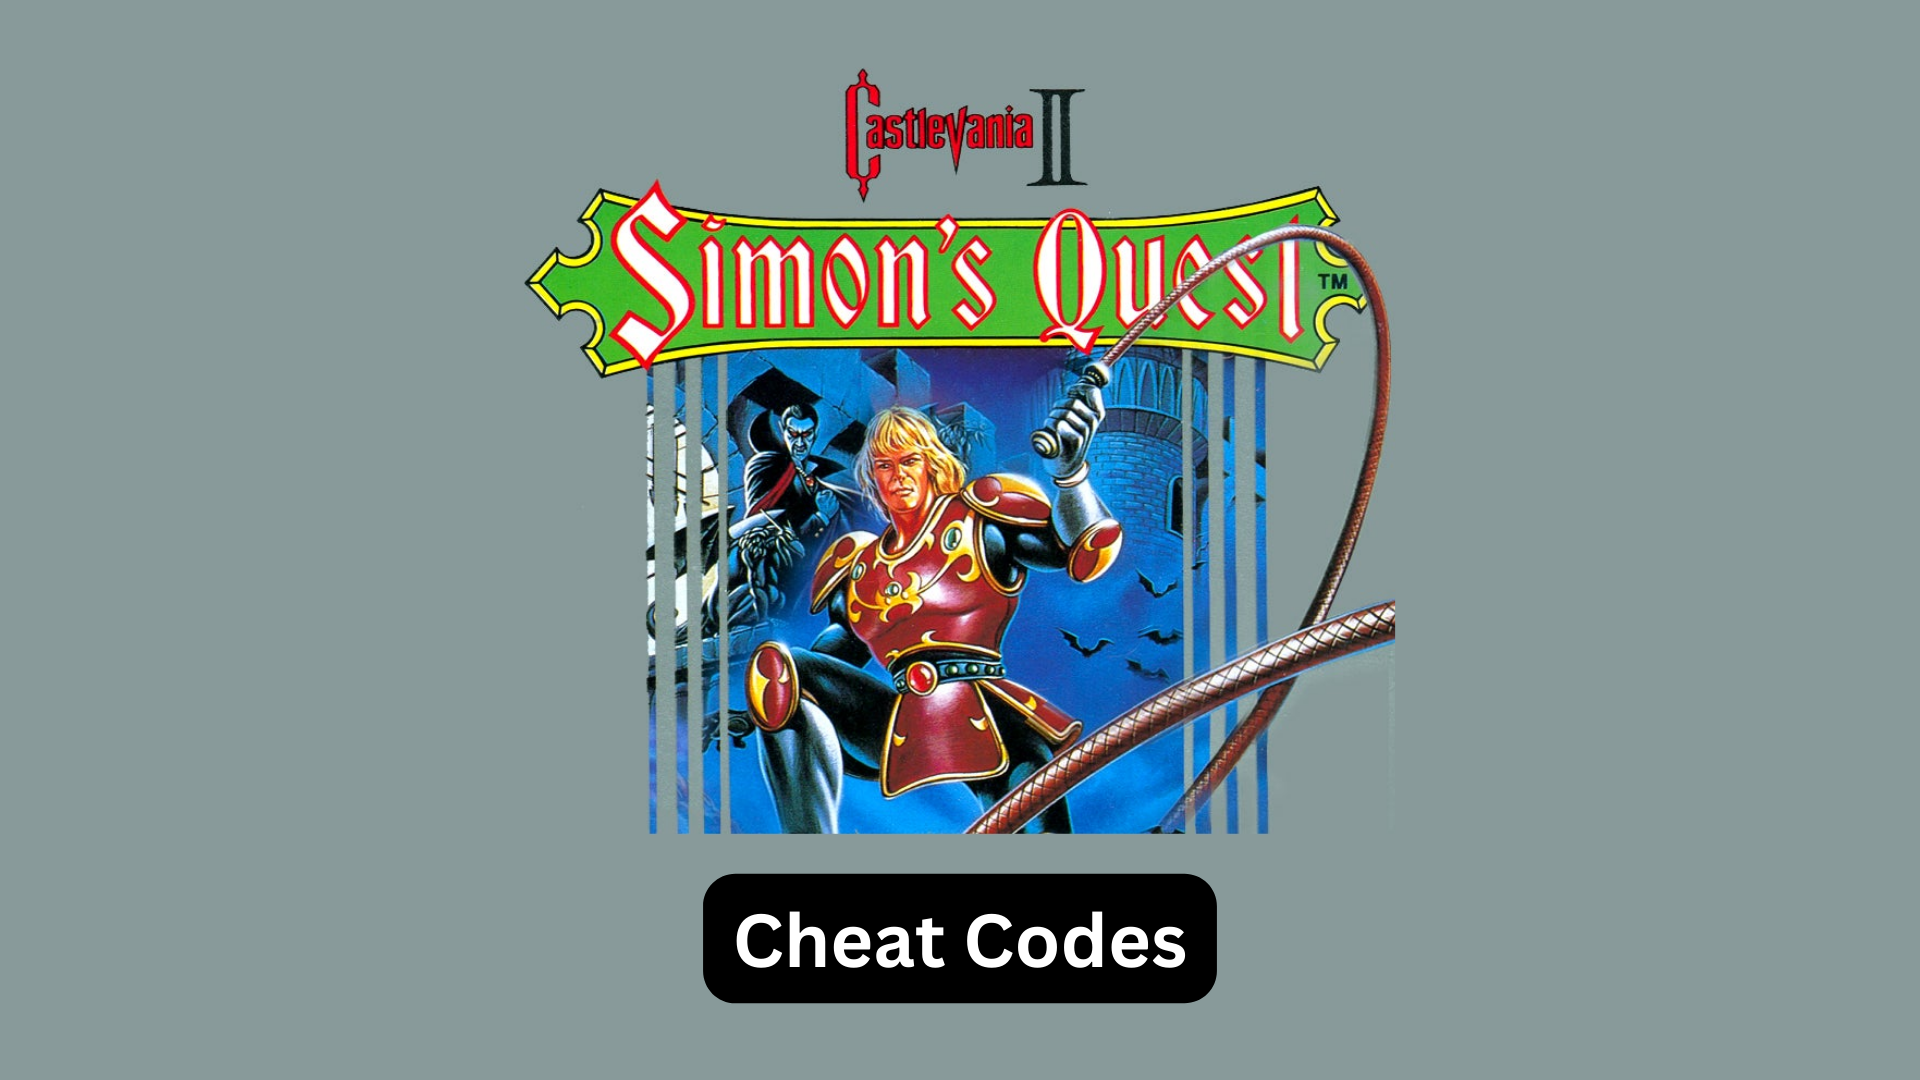 castlevania ii: simon's quest cheat codes